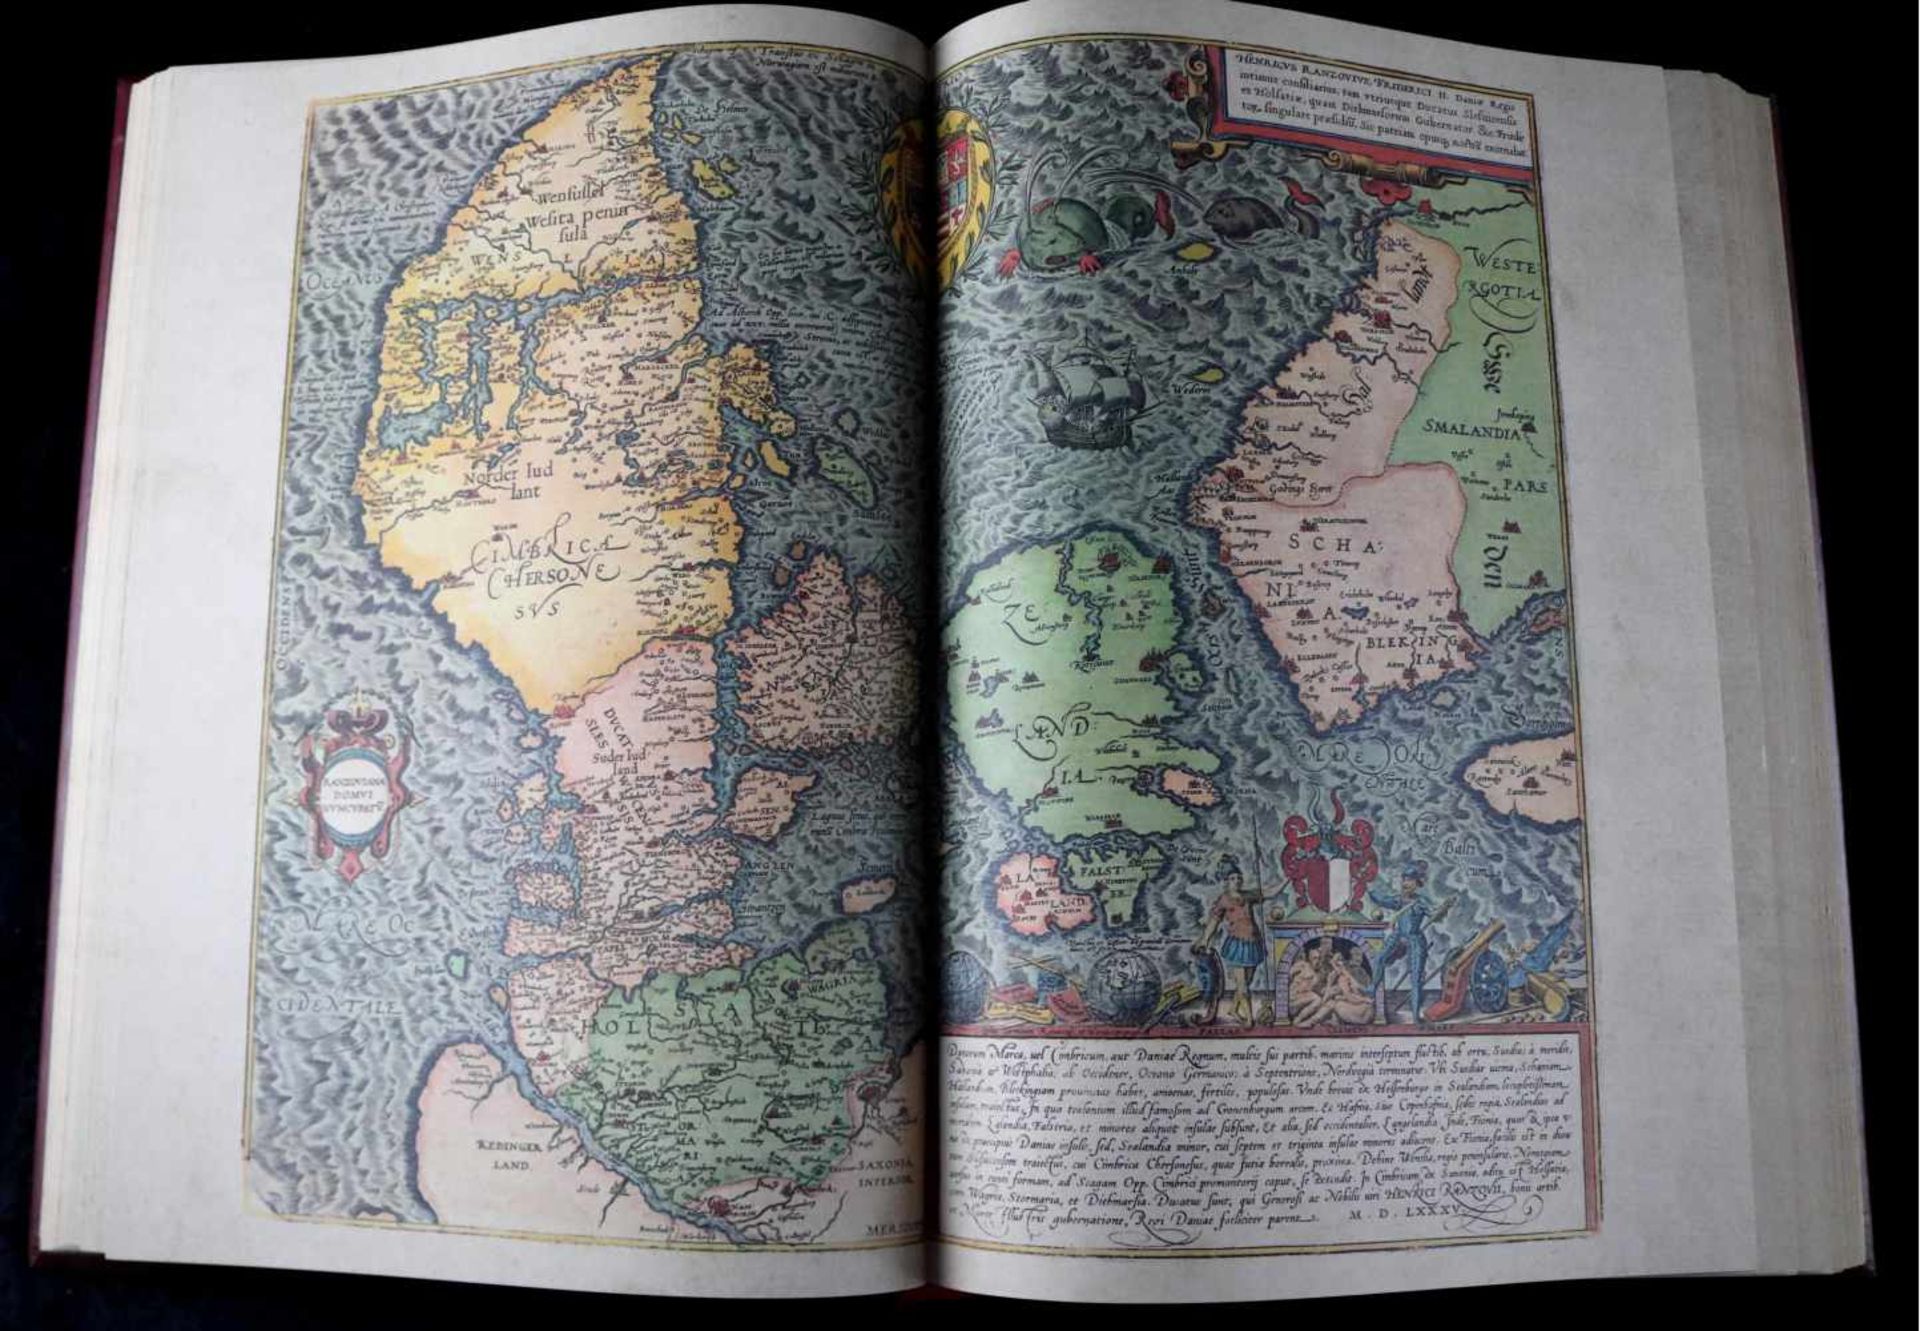 Faksimile, Civitates Orbis Terrarum/Städte der Welt, 1574, Coronverlag, Hrsg.: Georg Braun, - Image 5 of 6